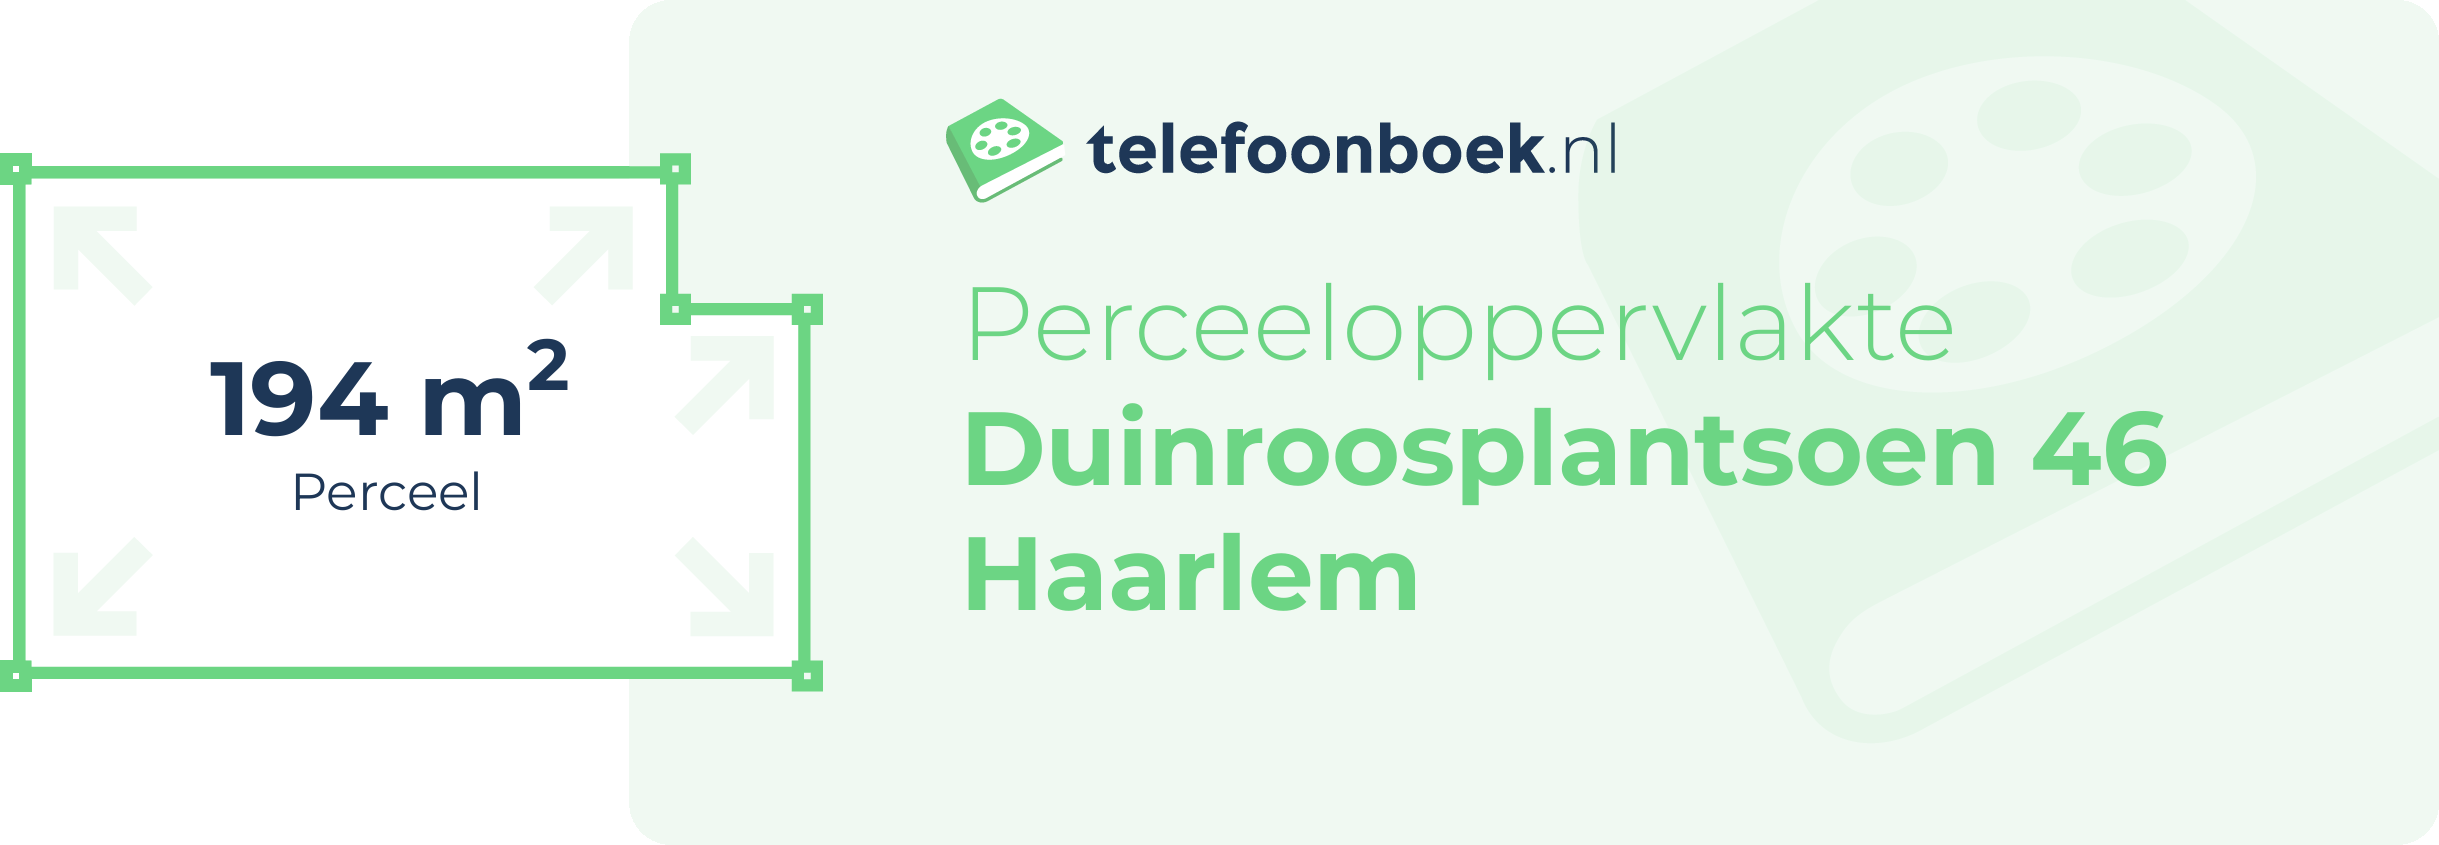 Perceeloppervlakte Duinroosplantsoen 46 Haarlem